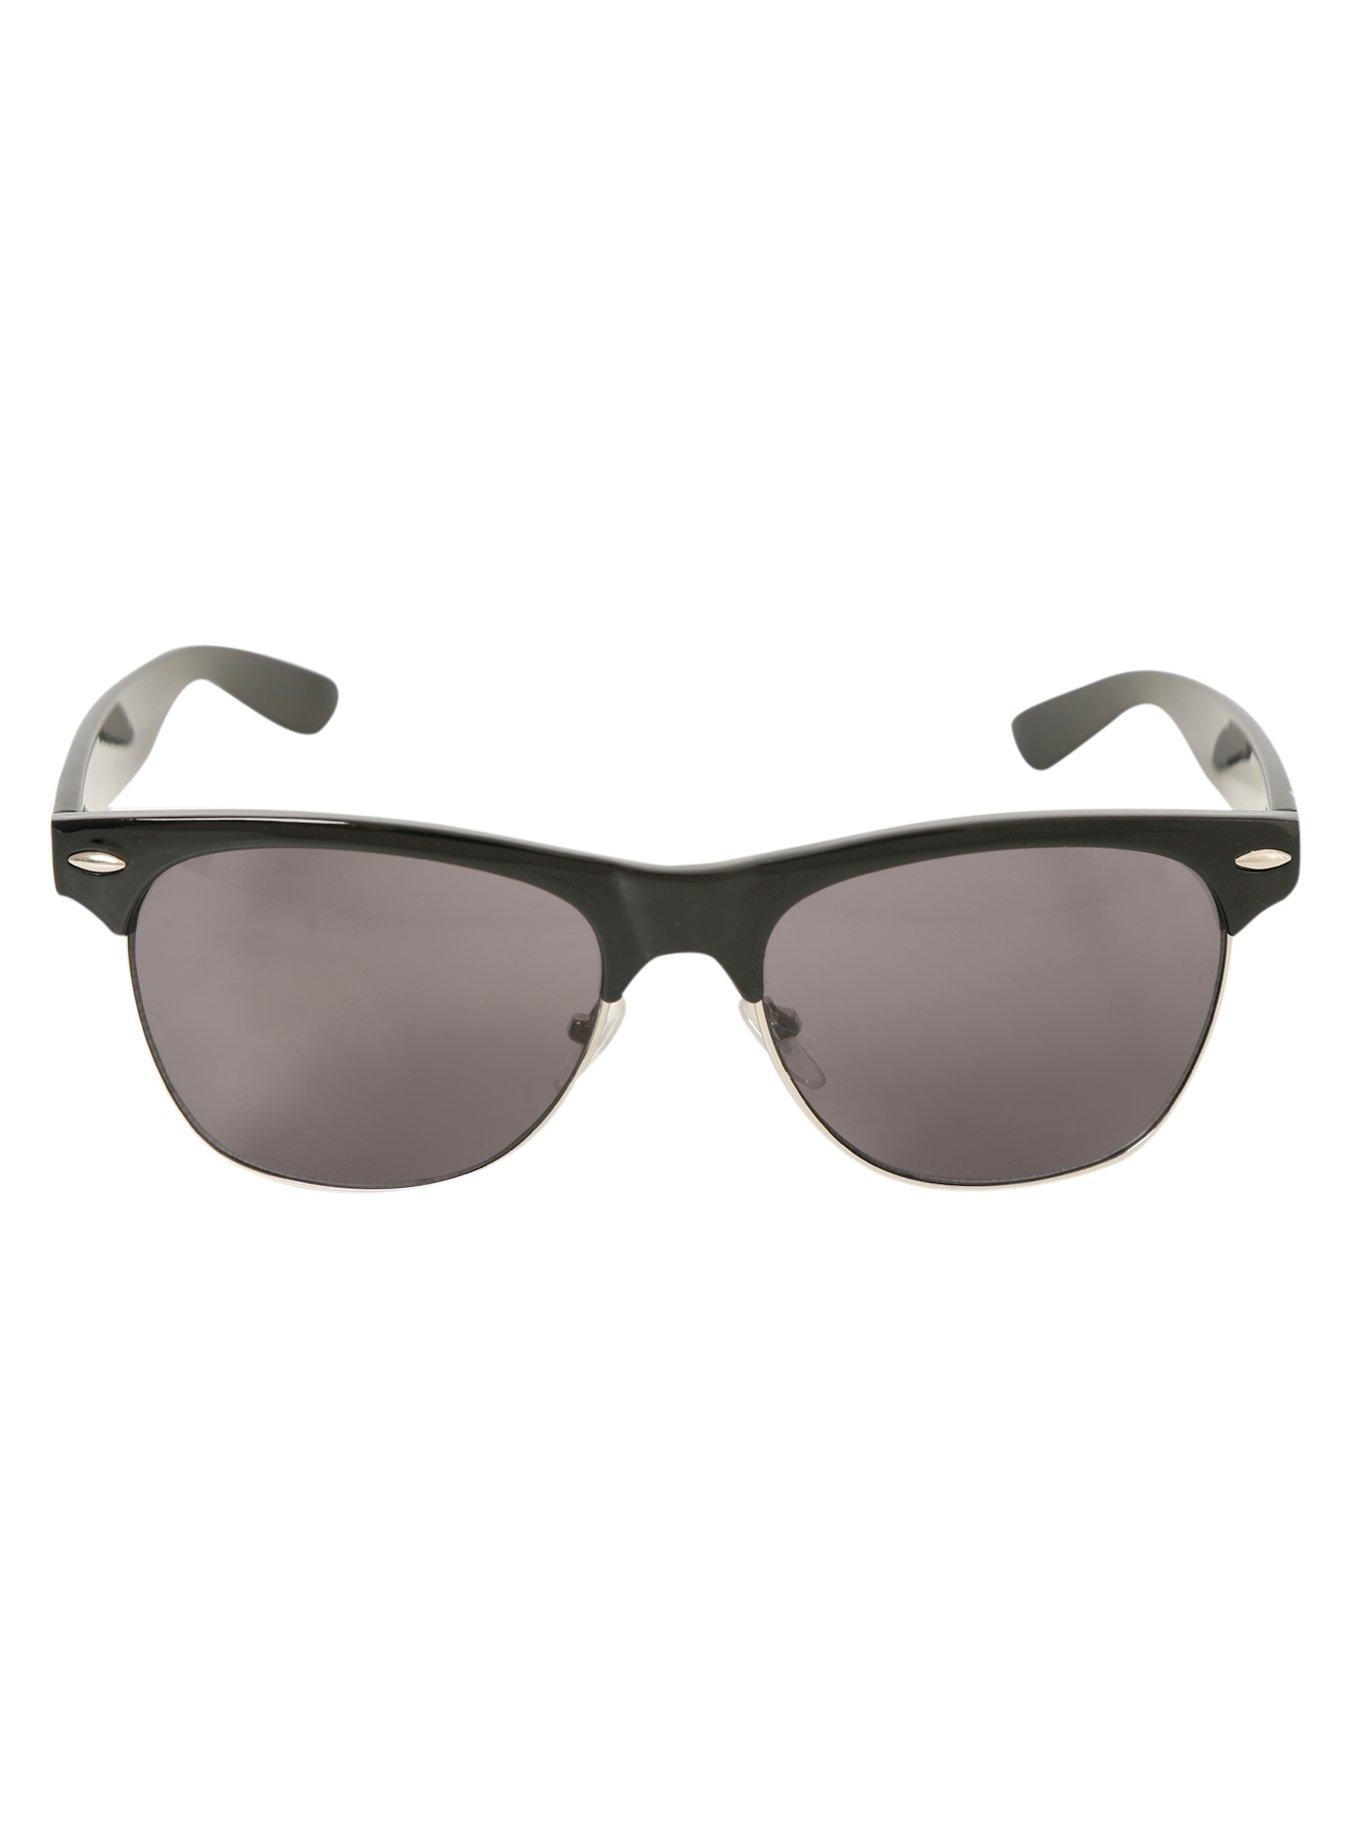 Black Skull Filigree Arm Half-Rim Sunglasses, , alternate